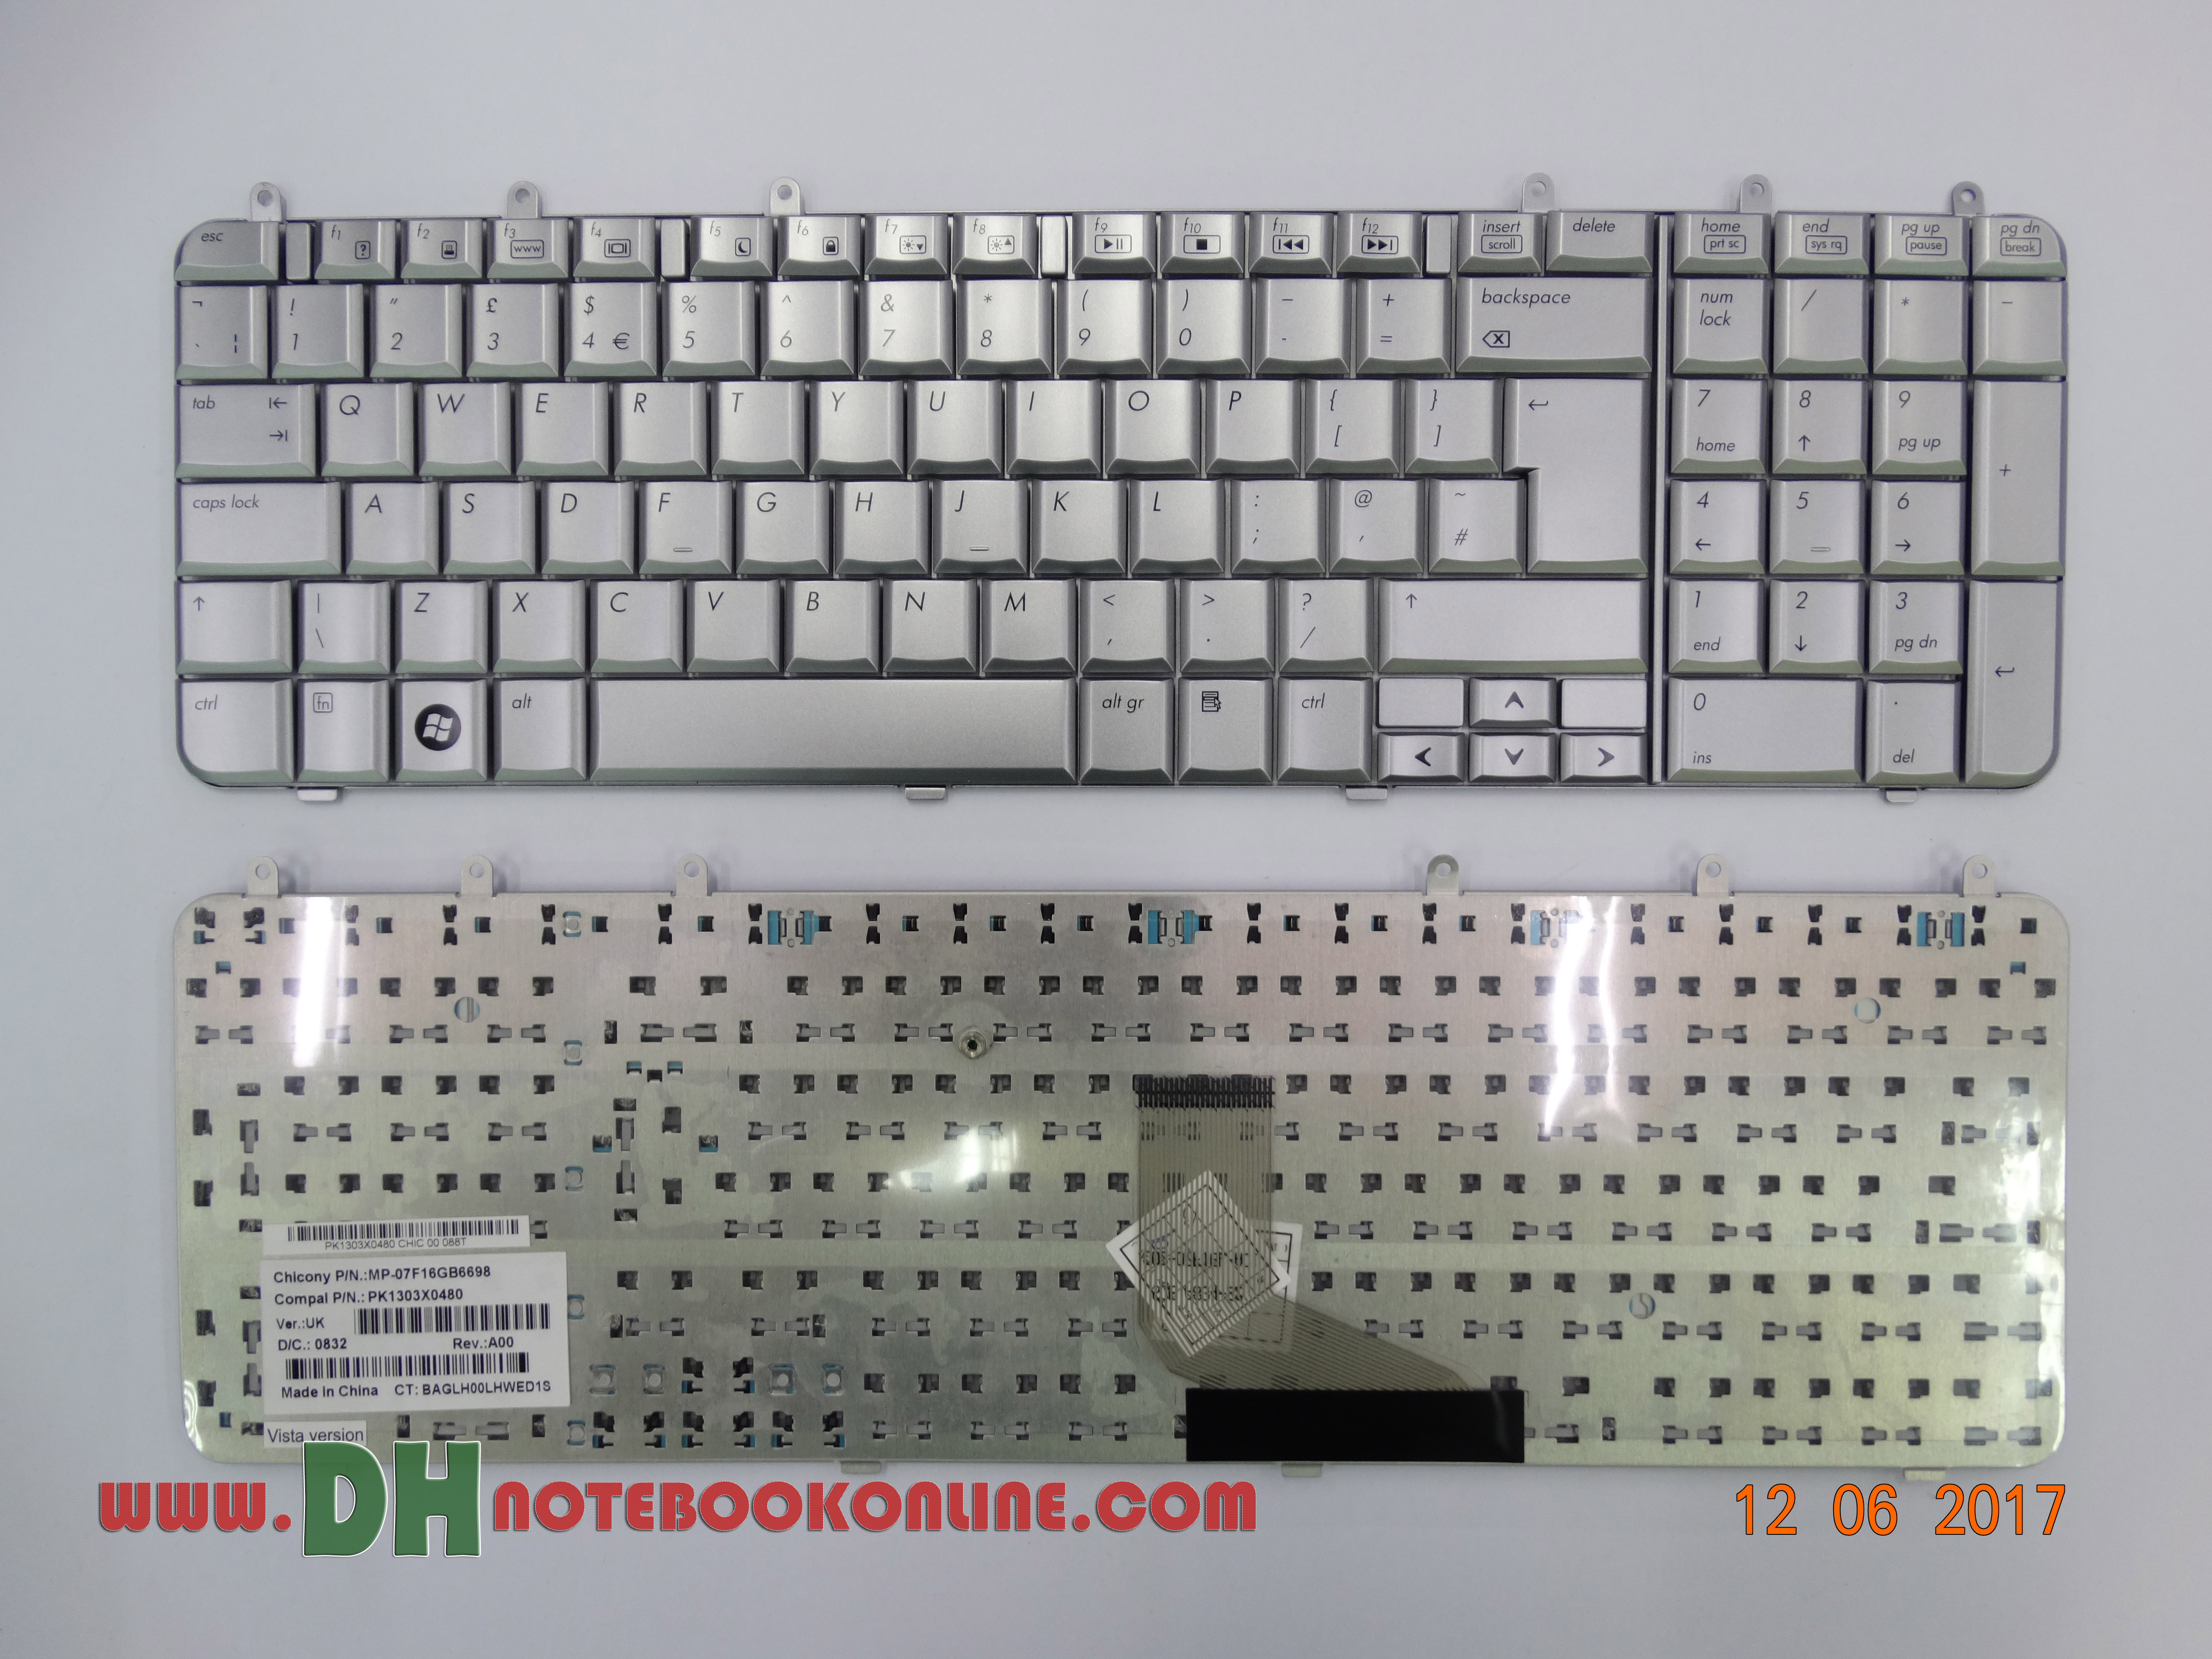 HP DV7 Keyboard